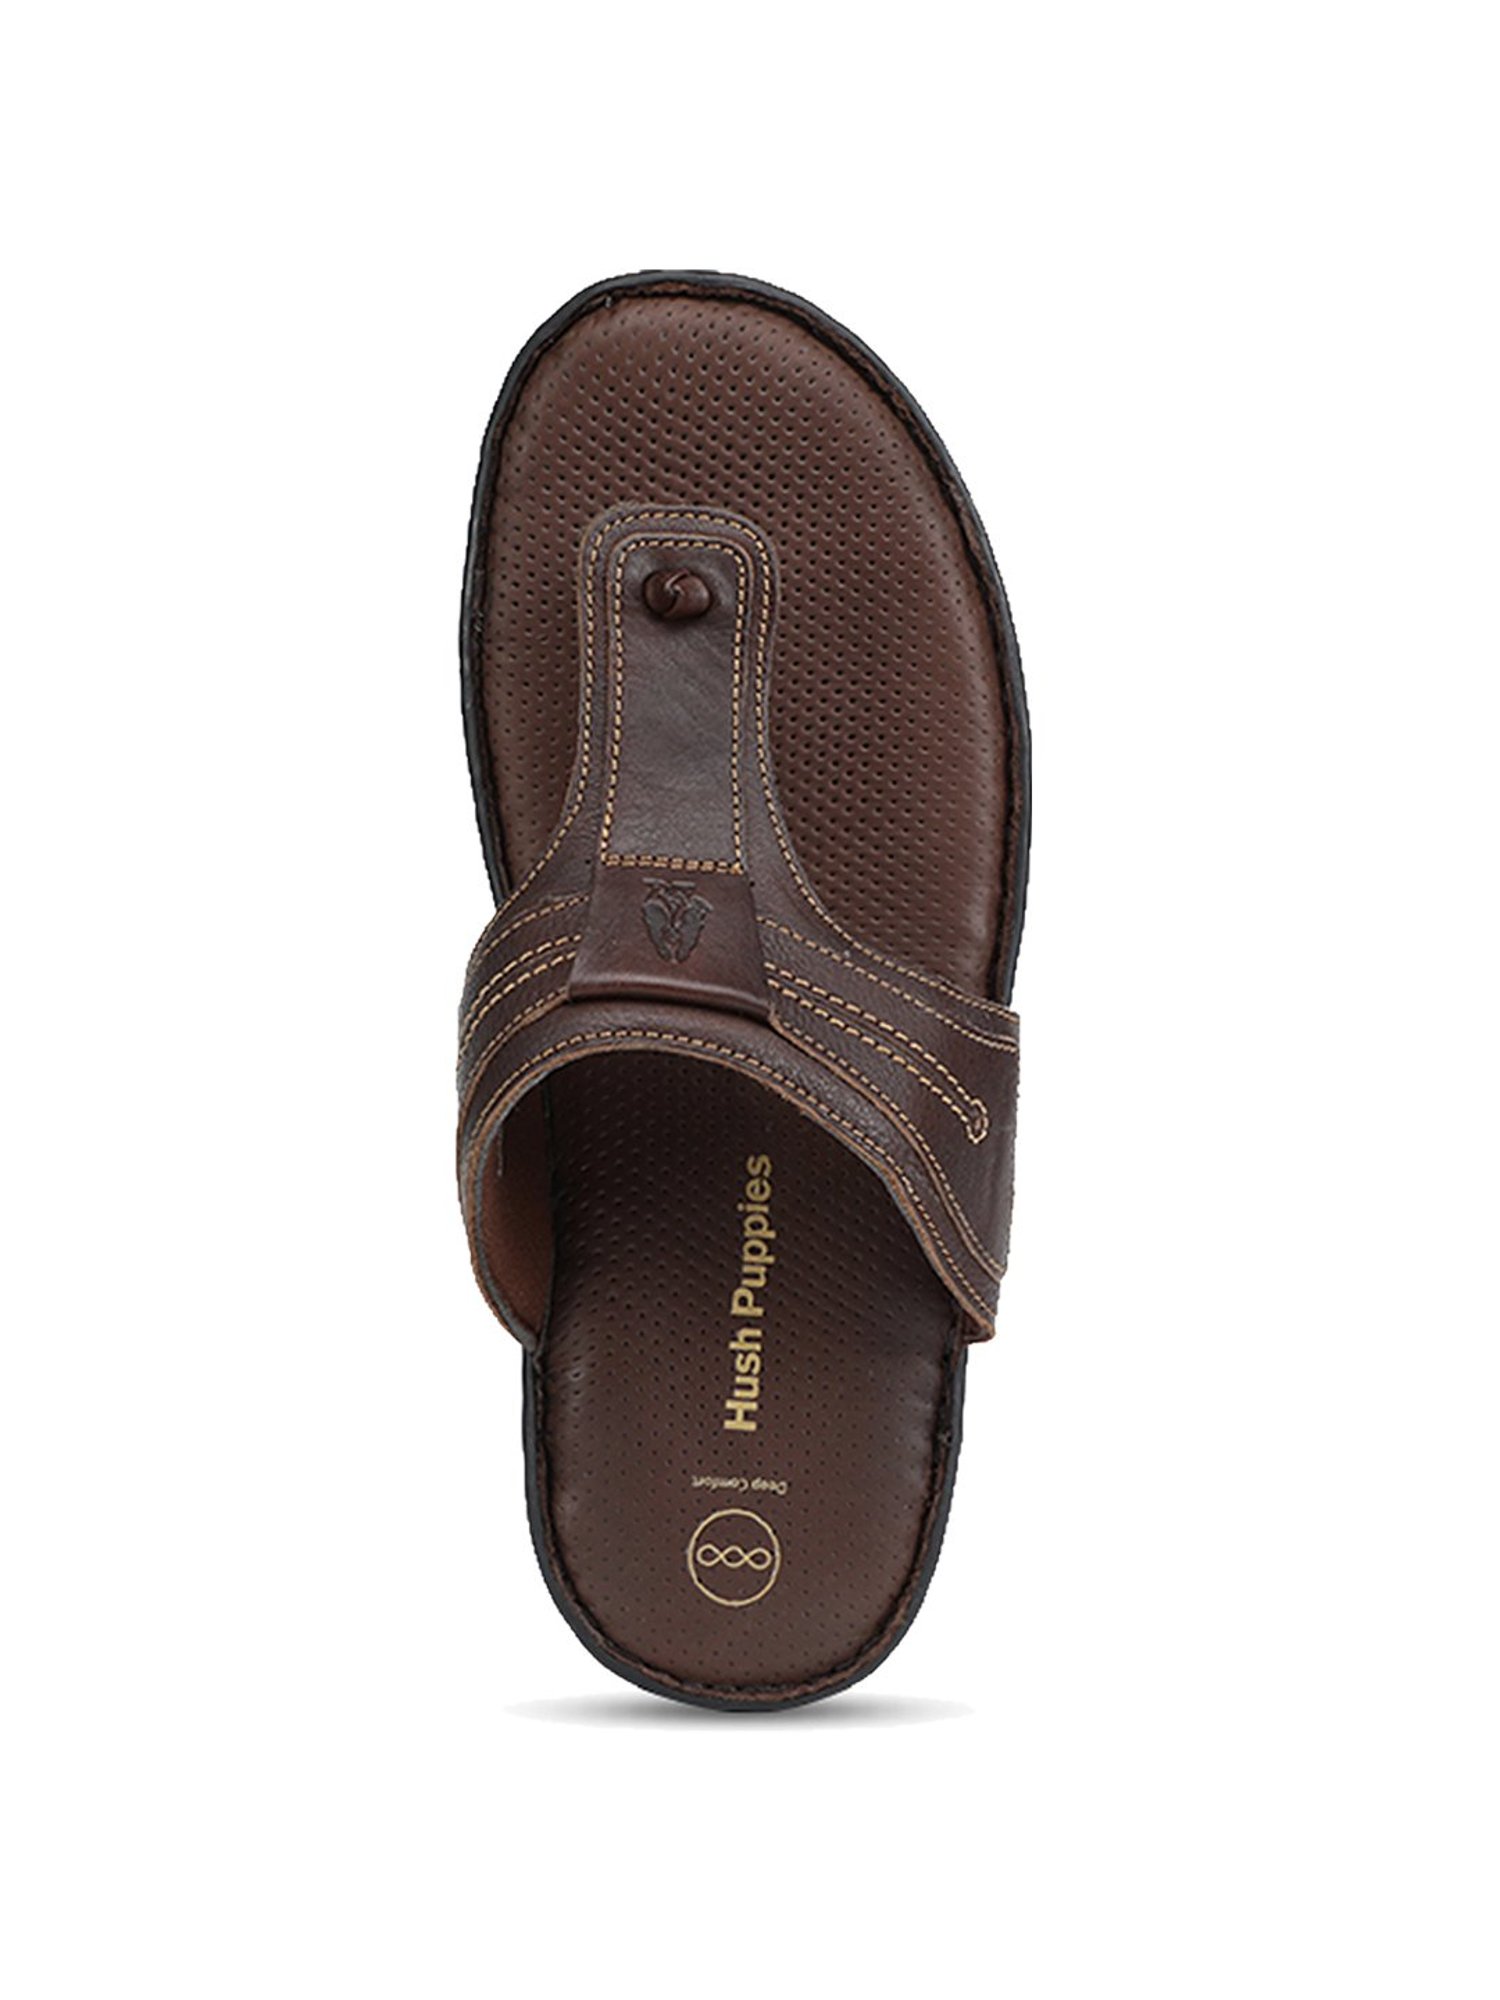 Buy Black Sandals for Men by Bata Online | Ajio.com